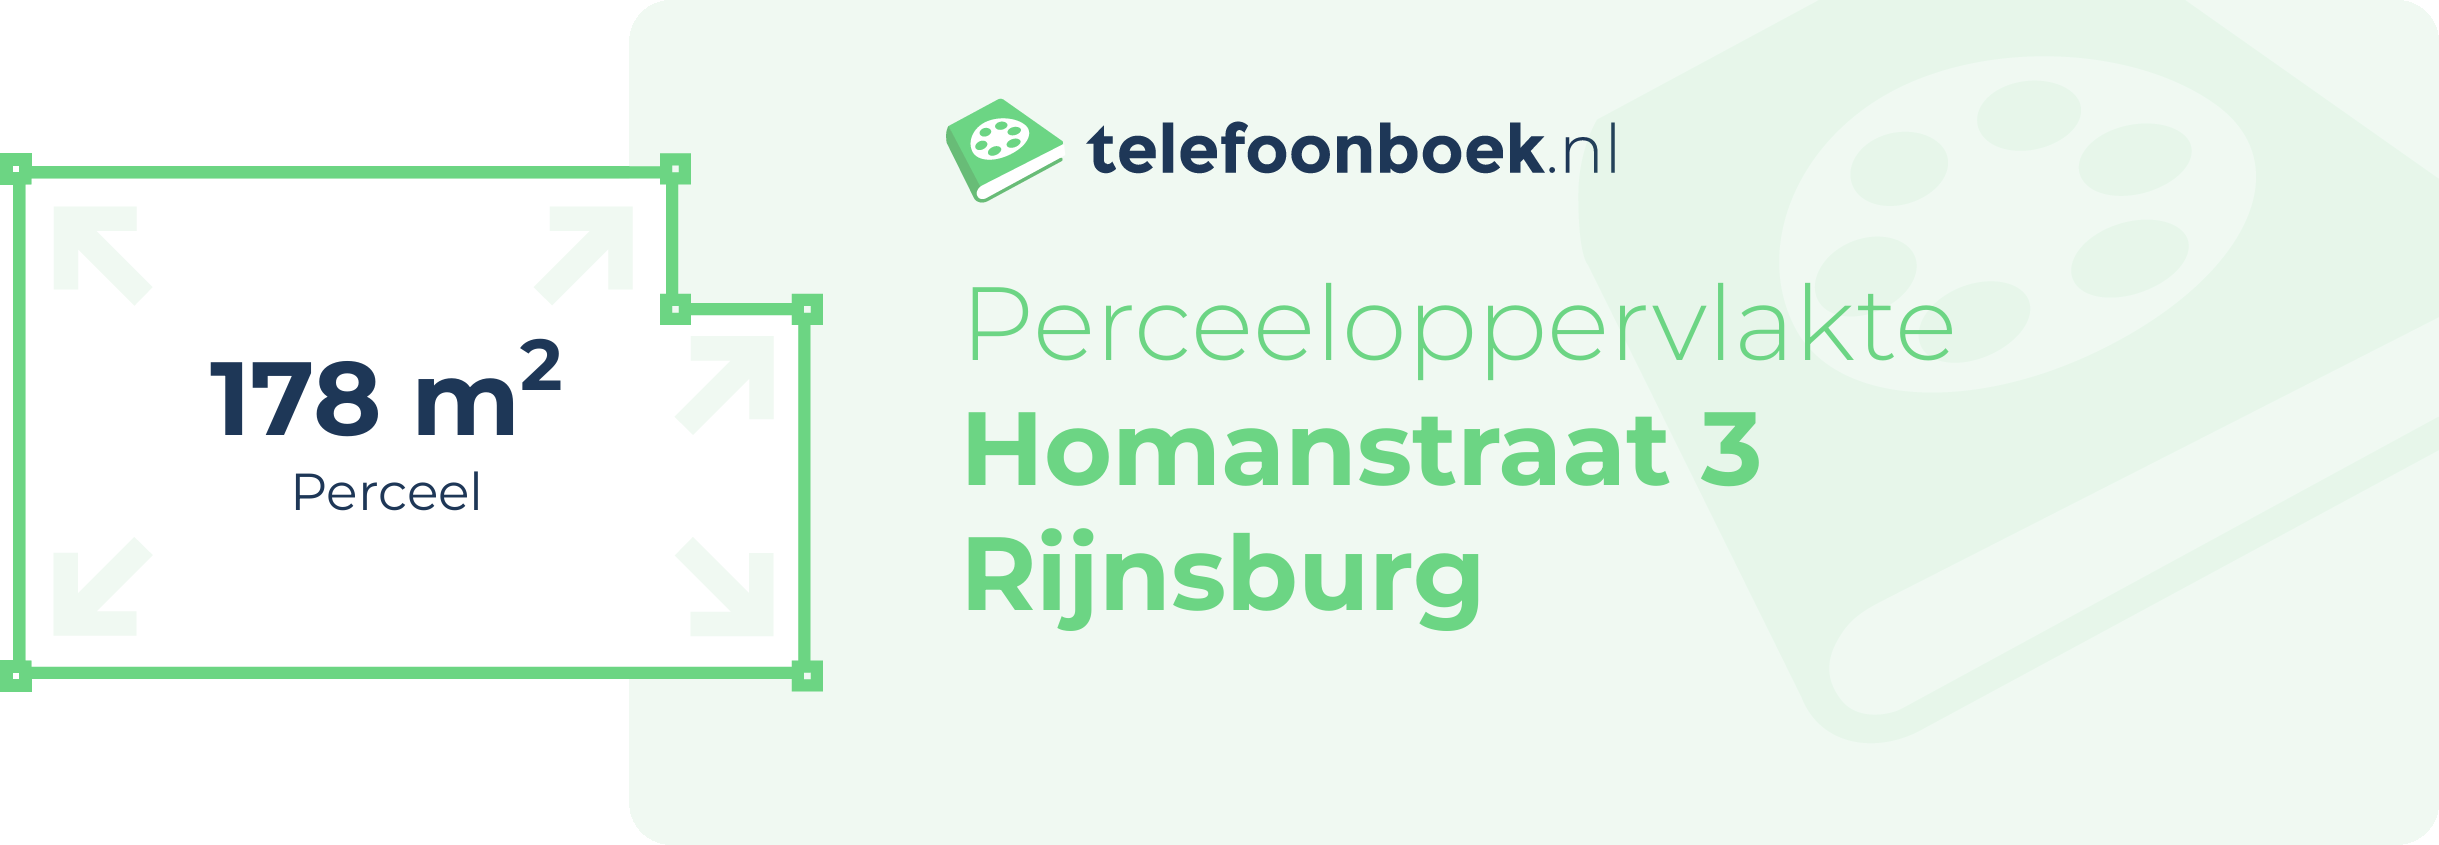 Perceeloppervlakte Homanstraat 3 Rijnsburg